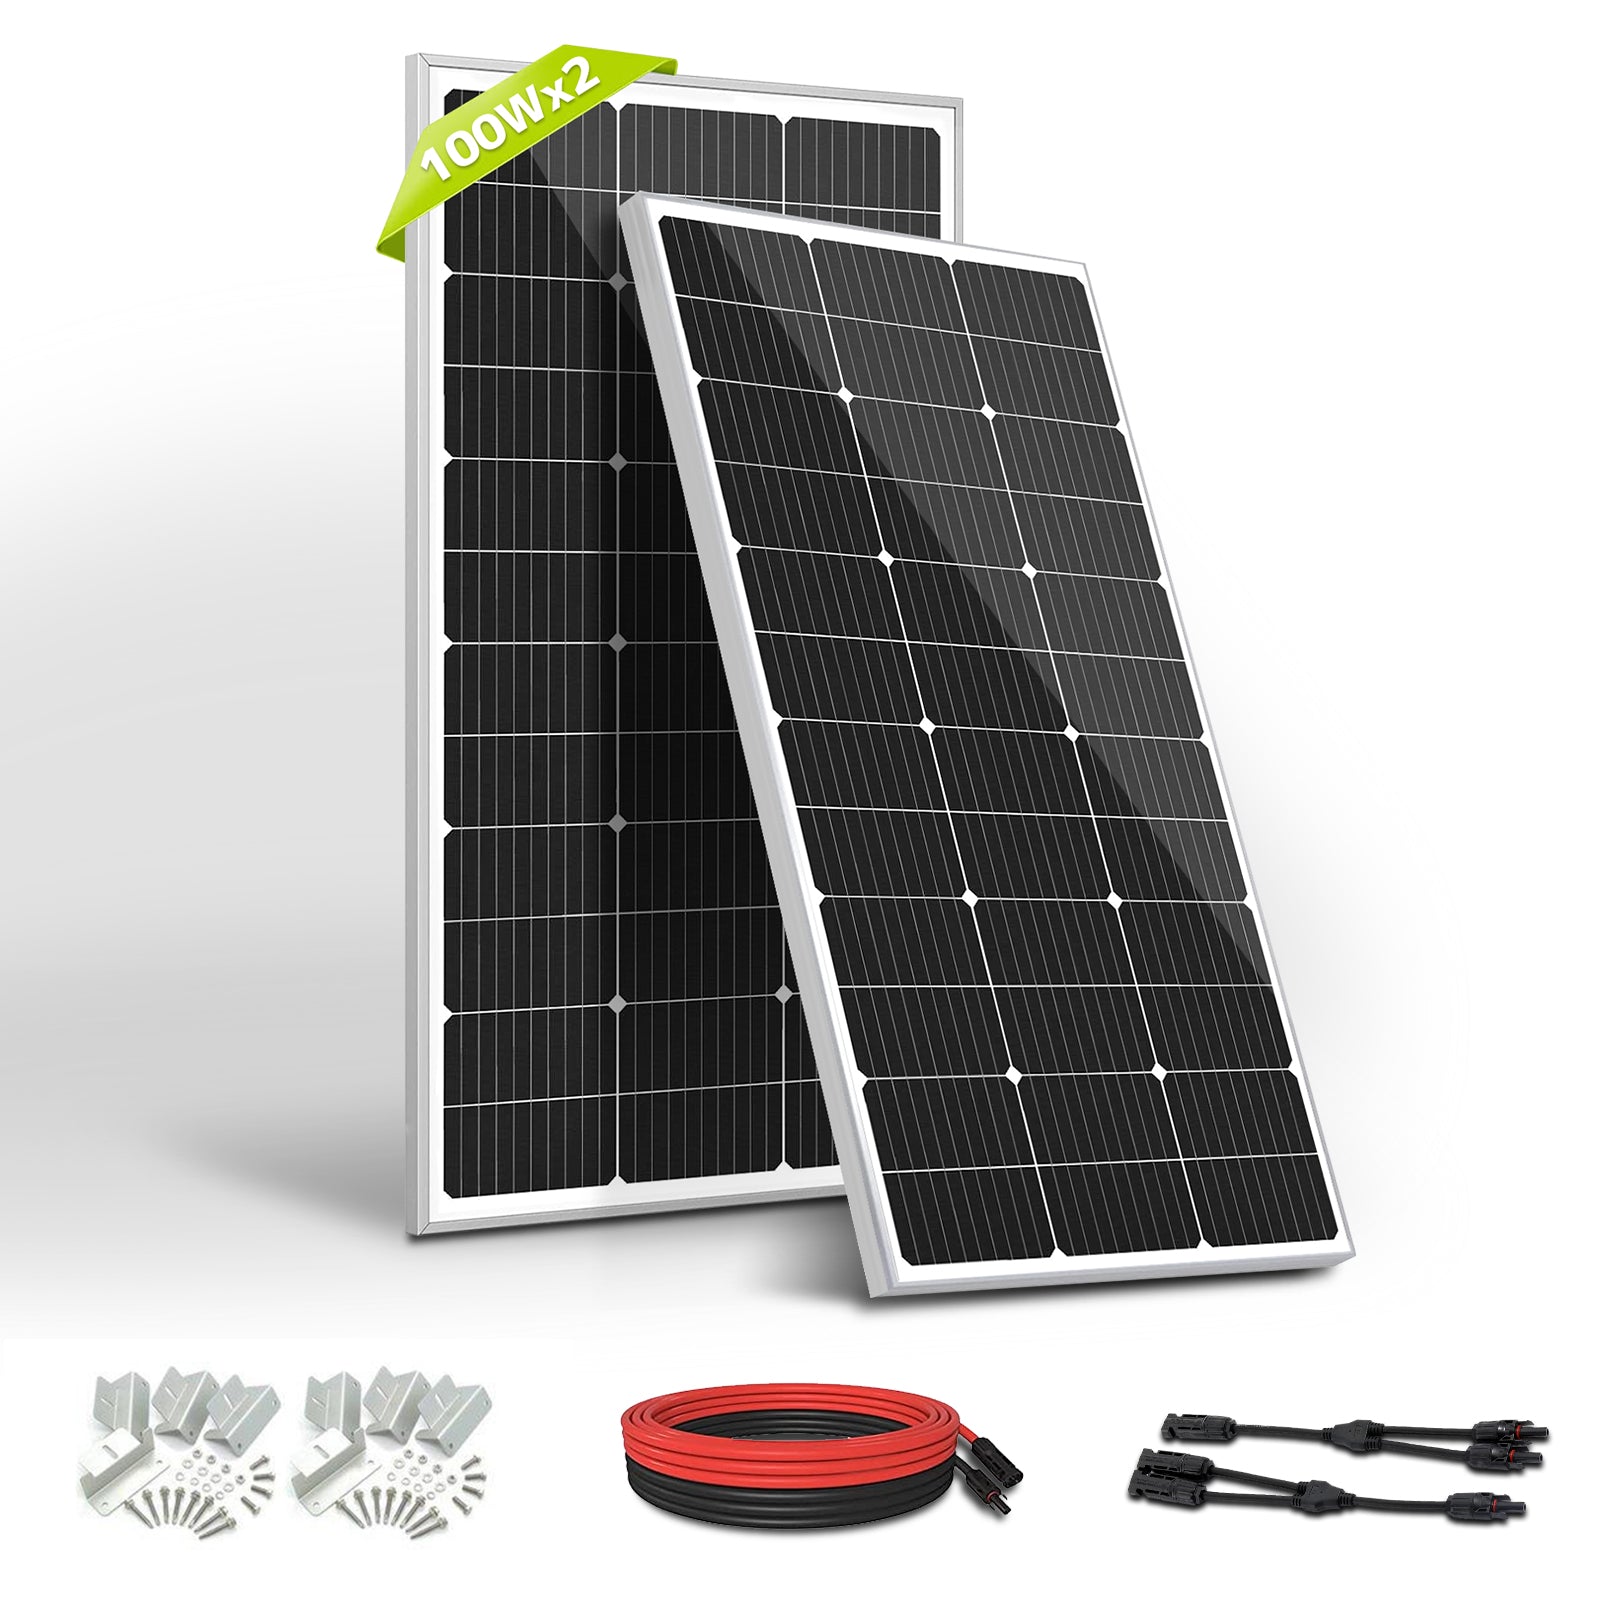 LVYUAN 200W太陽光発電セット ソーラーパネル2枚（100W）&ソーラー